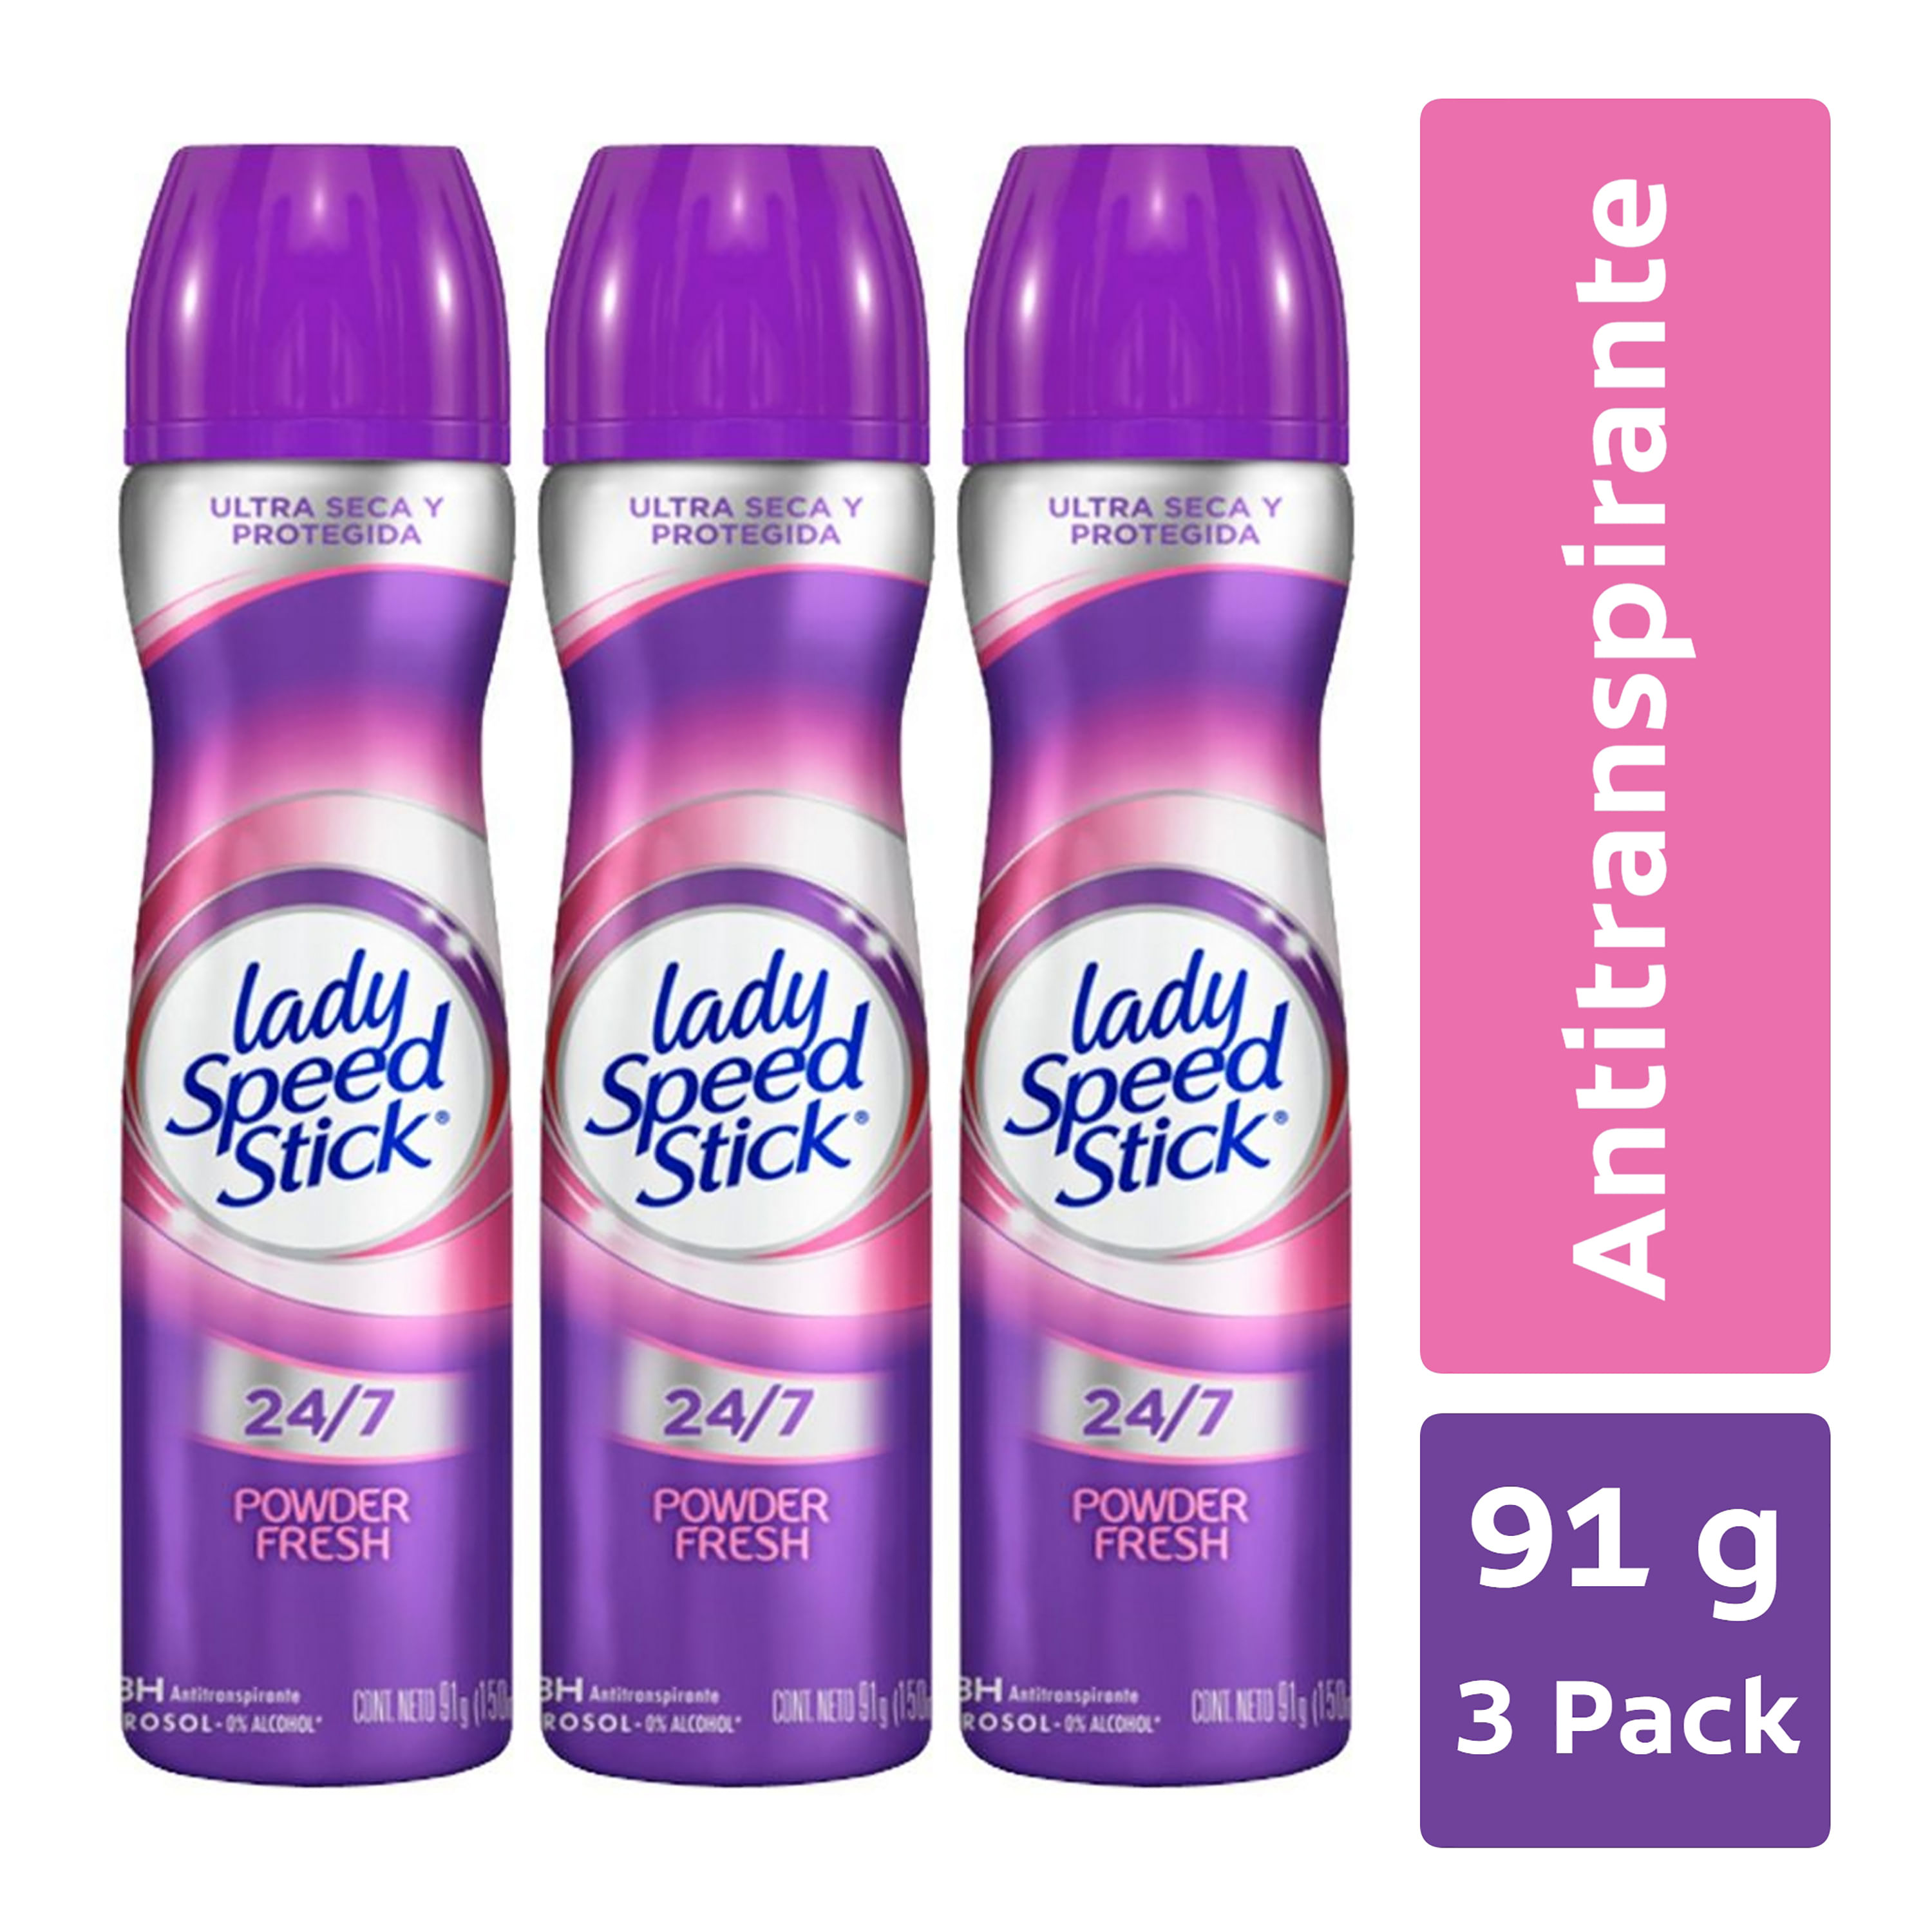 3Pack-Deo-Lady-Speed-Stick-Powder-Fresh-1-23857